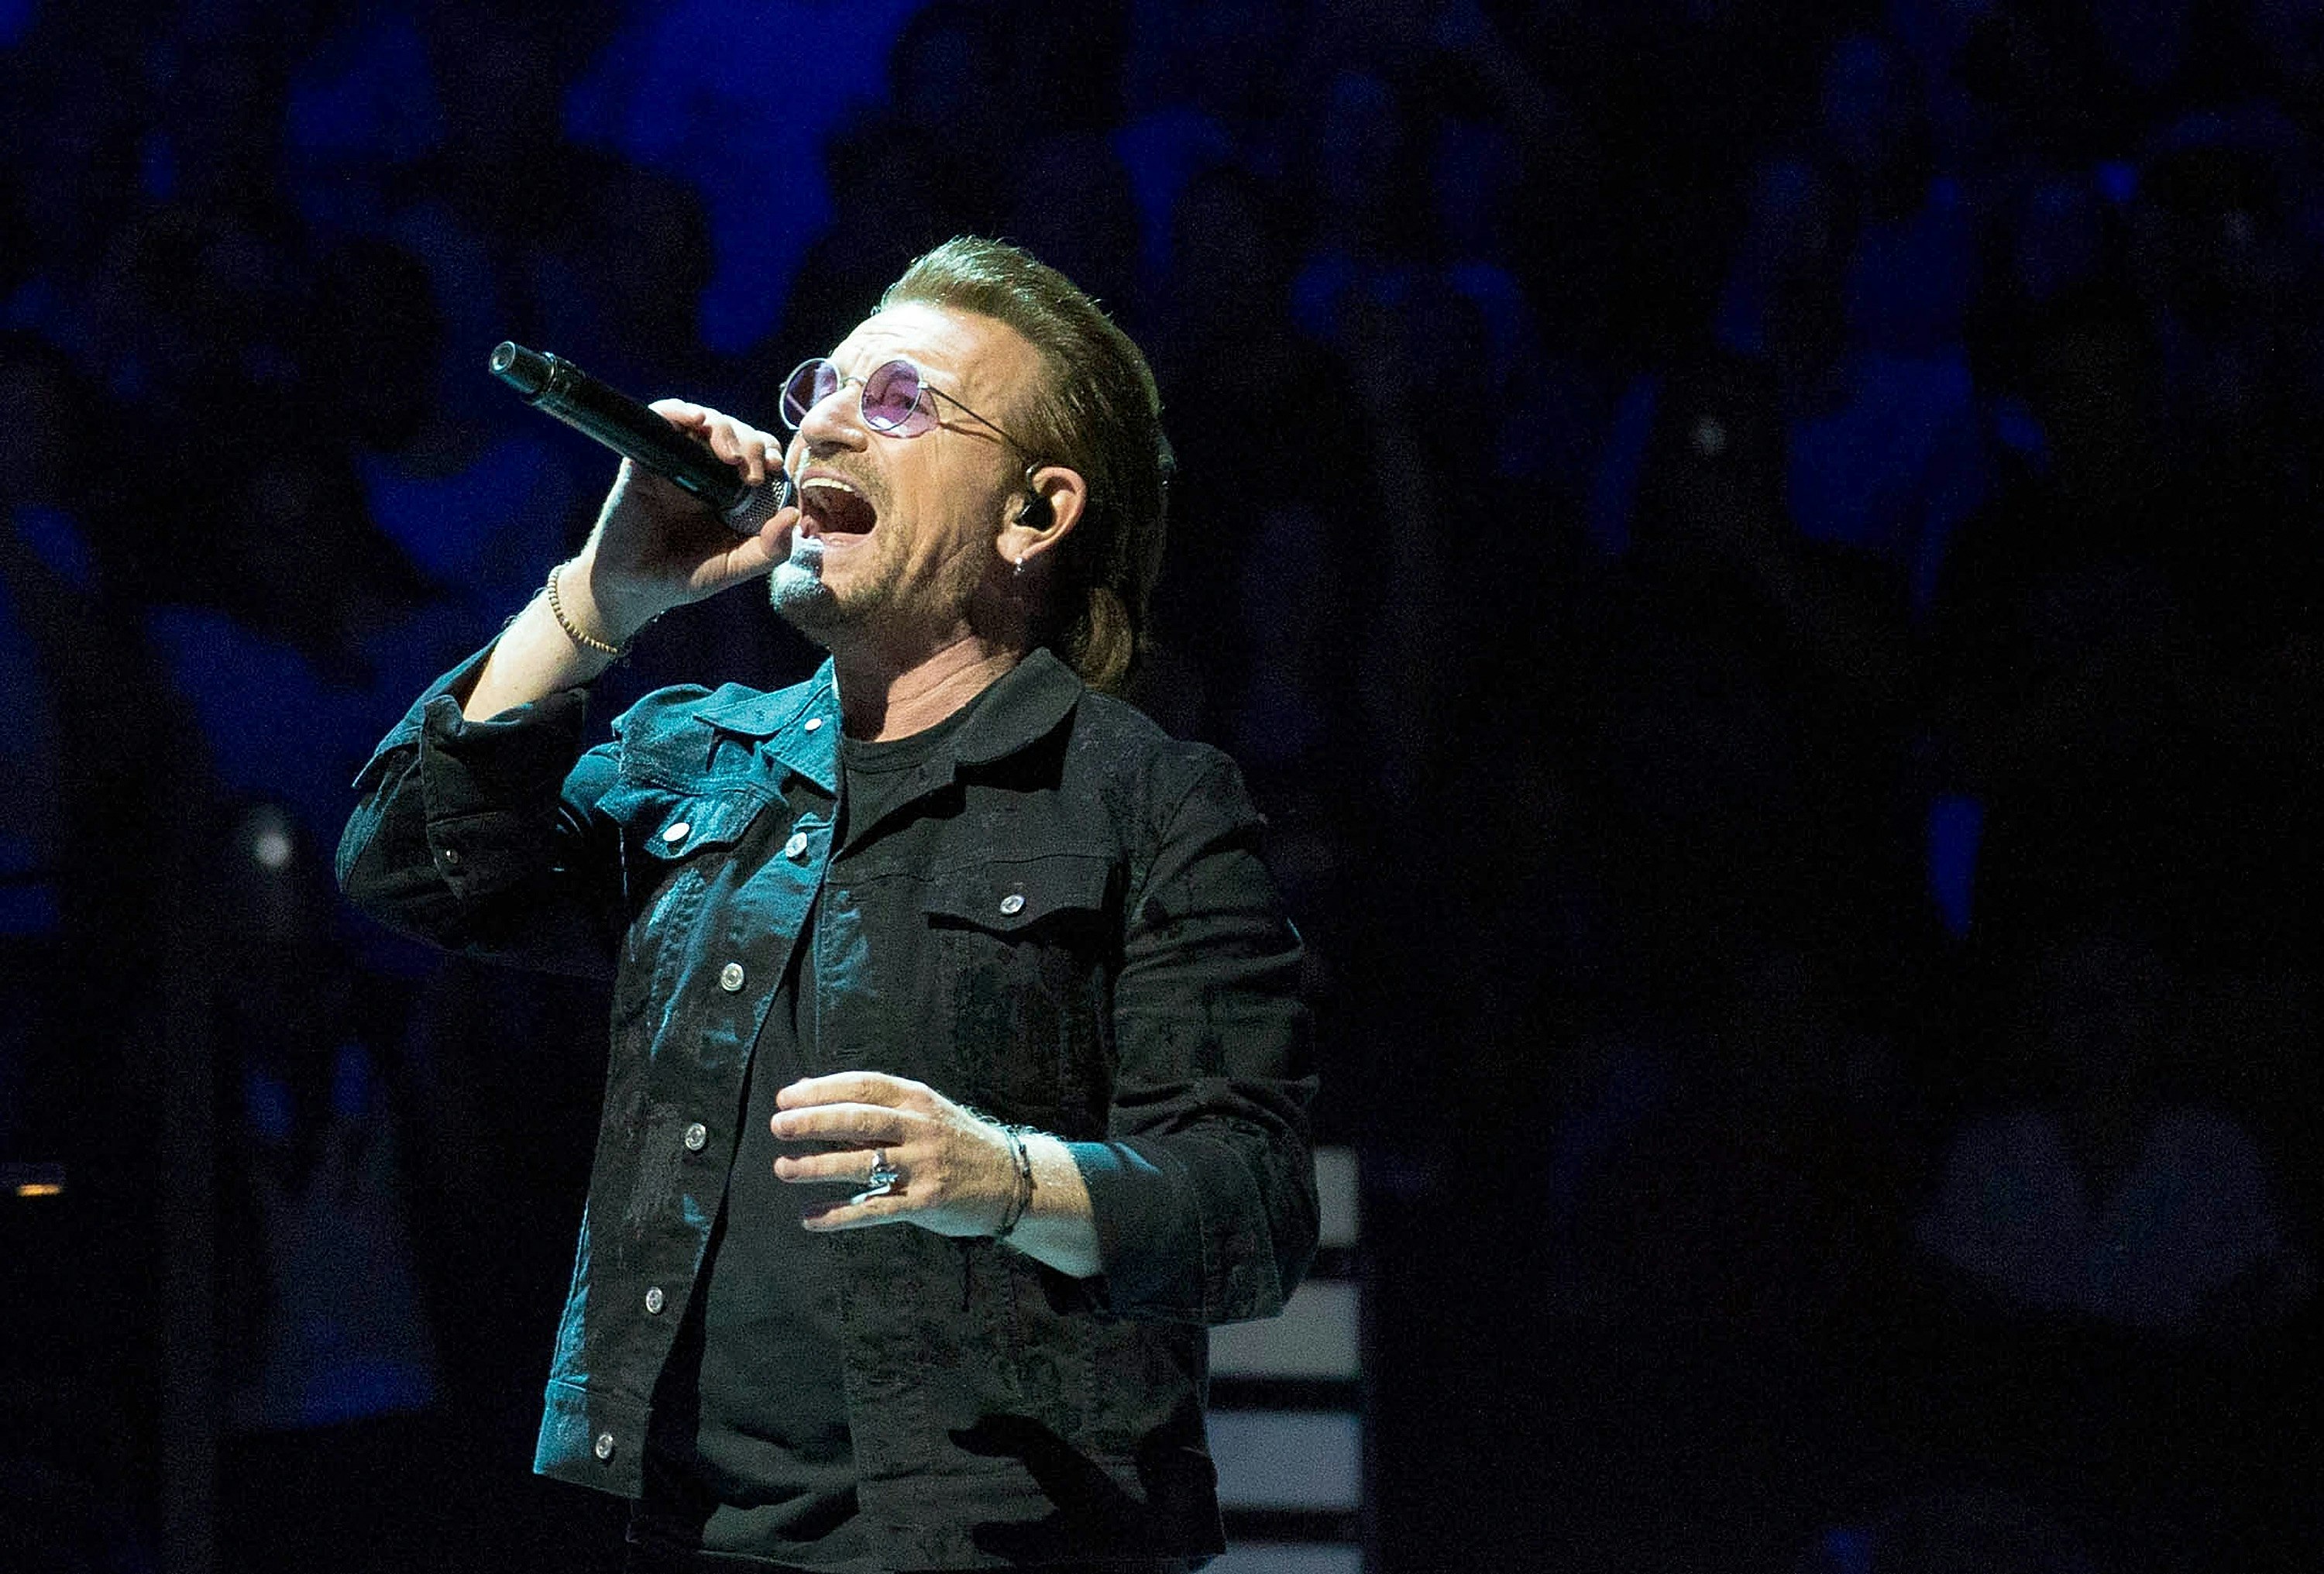 Bono singing on stage